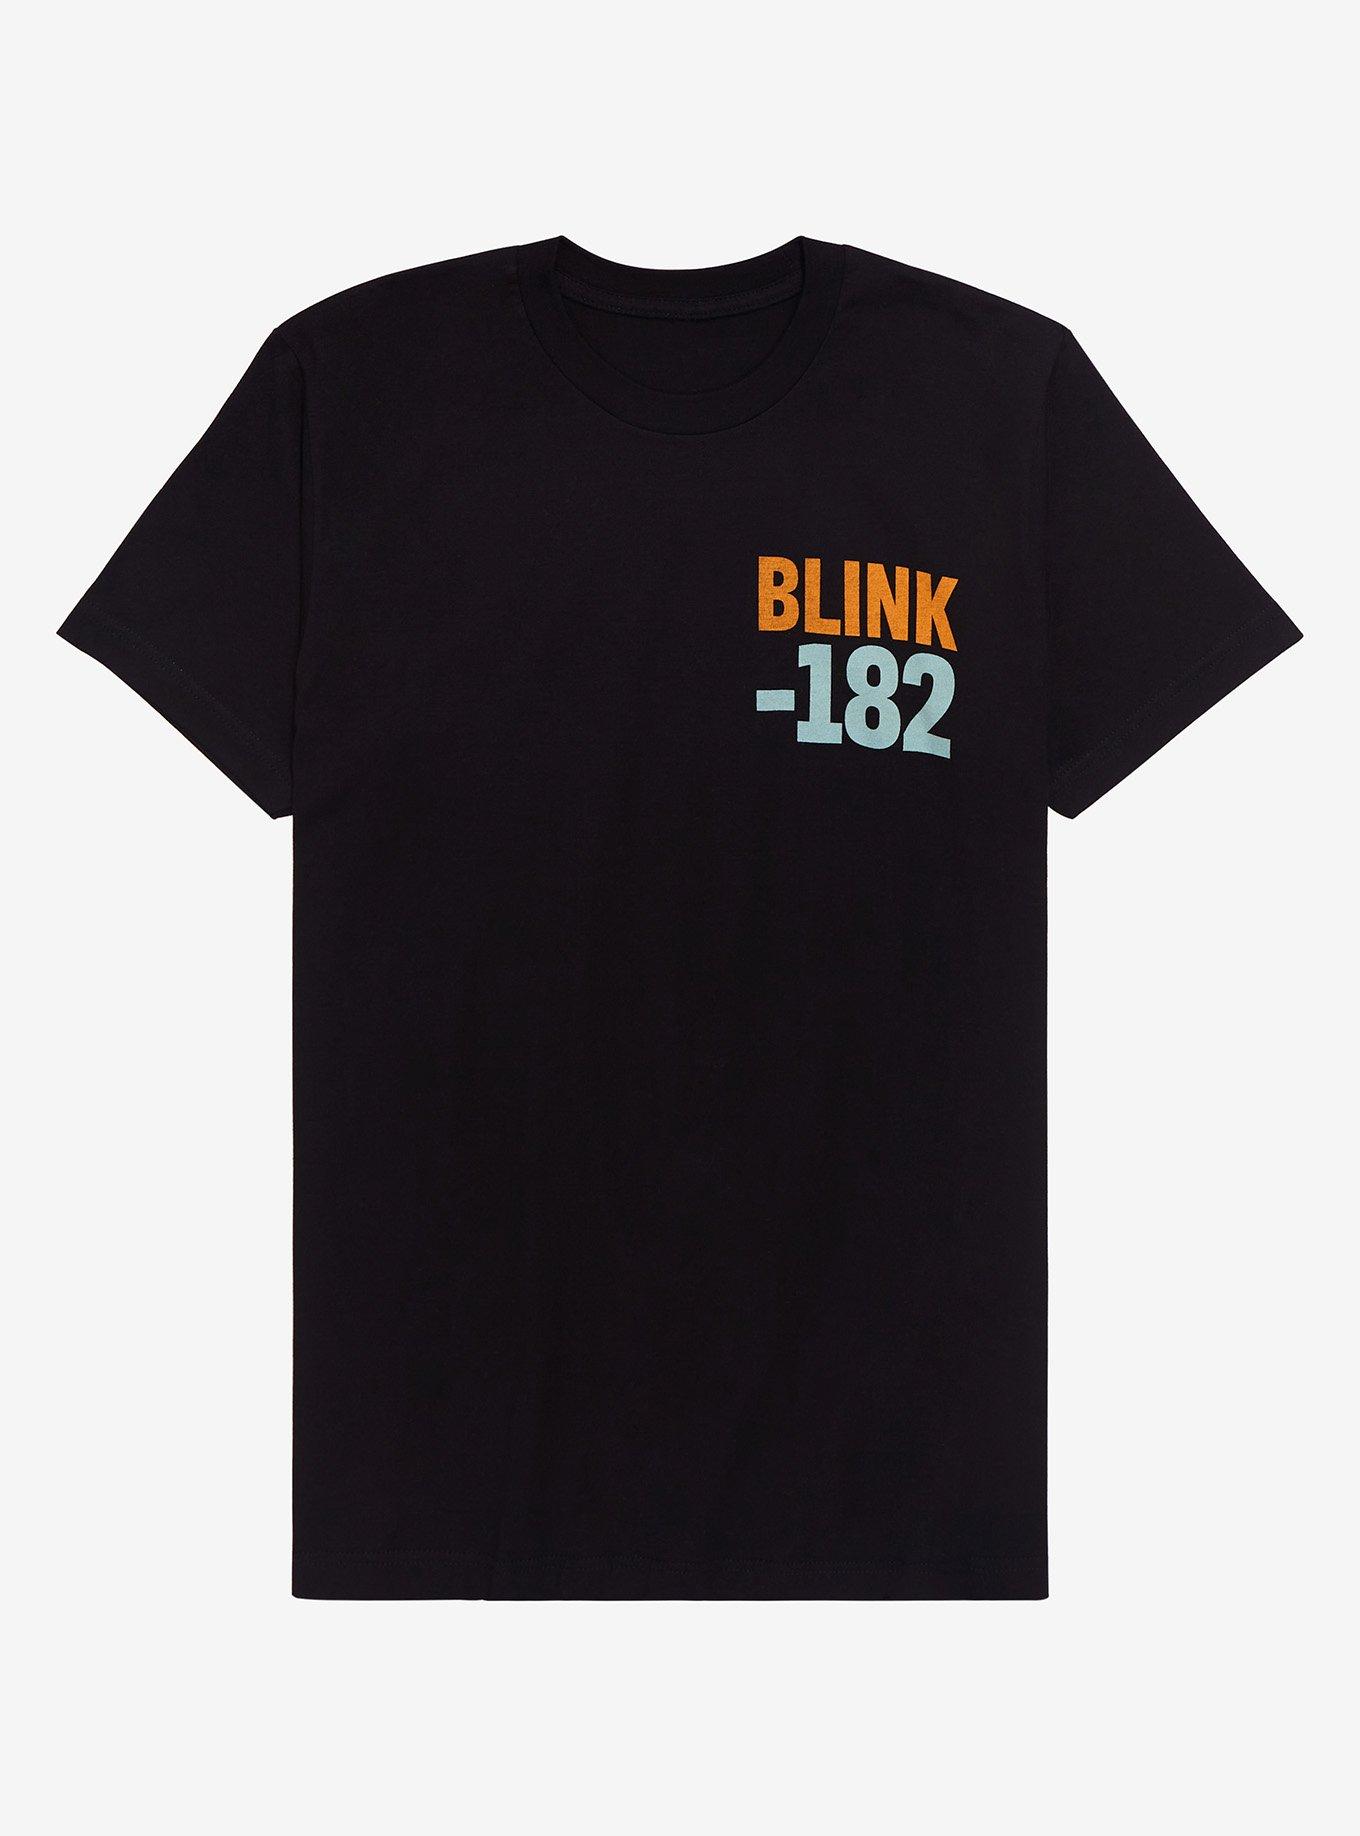 Blink-182 Crappy Punk Rock T-Shirt, BLACK, alternate